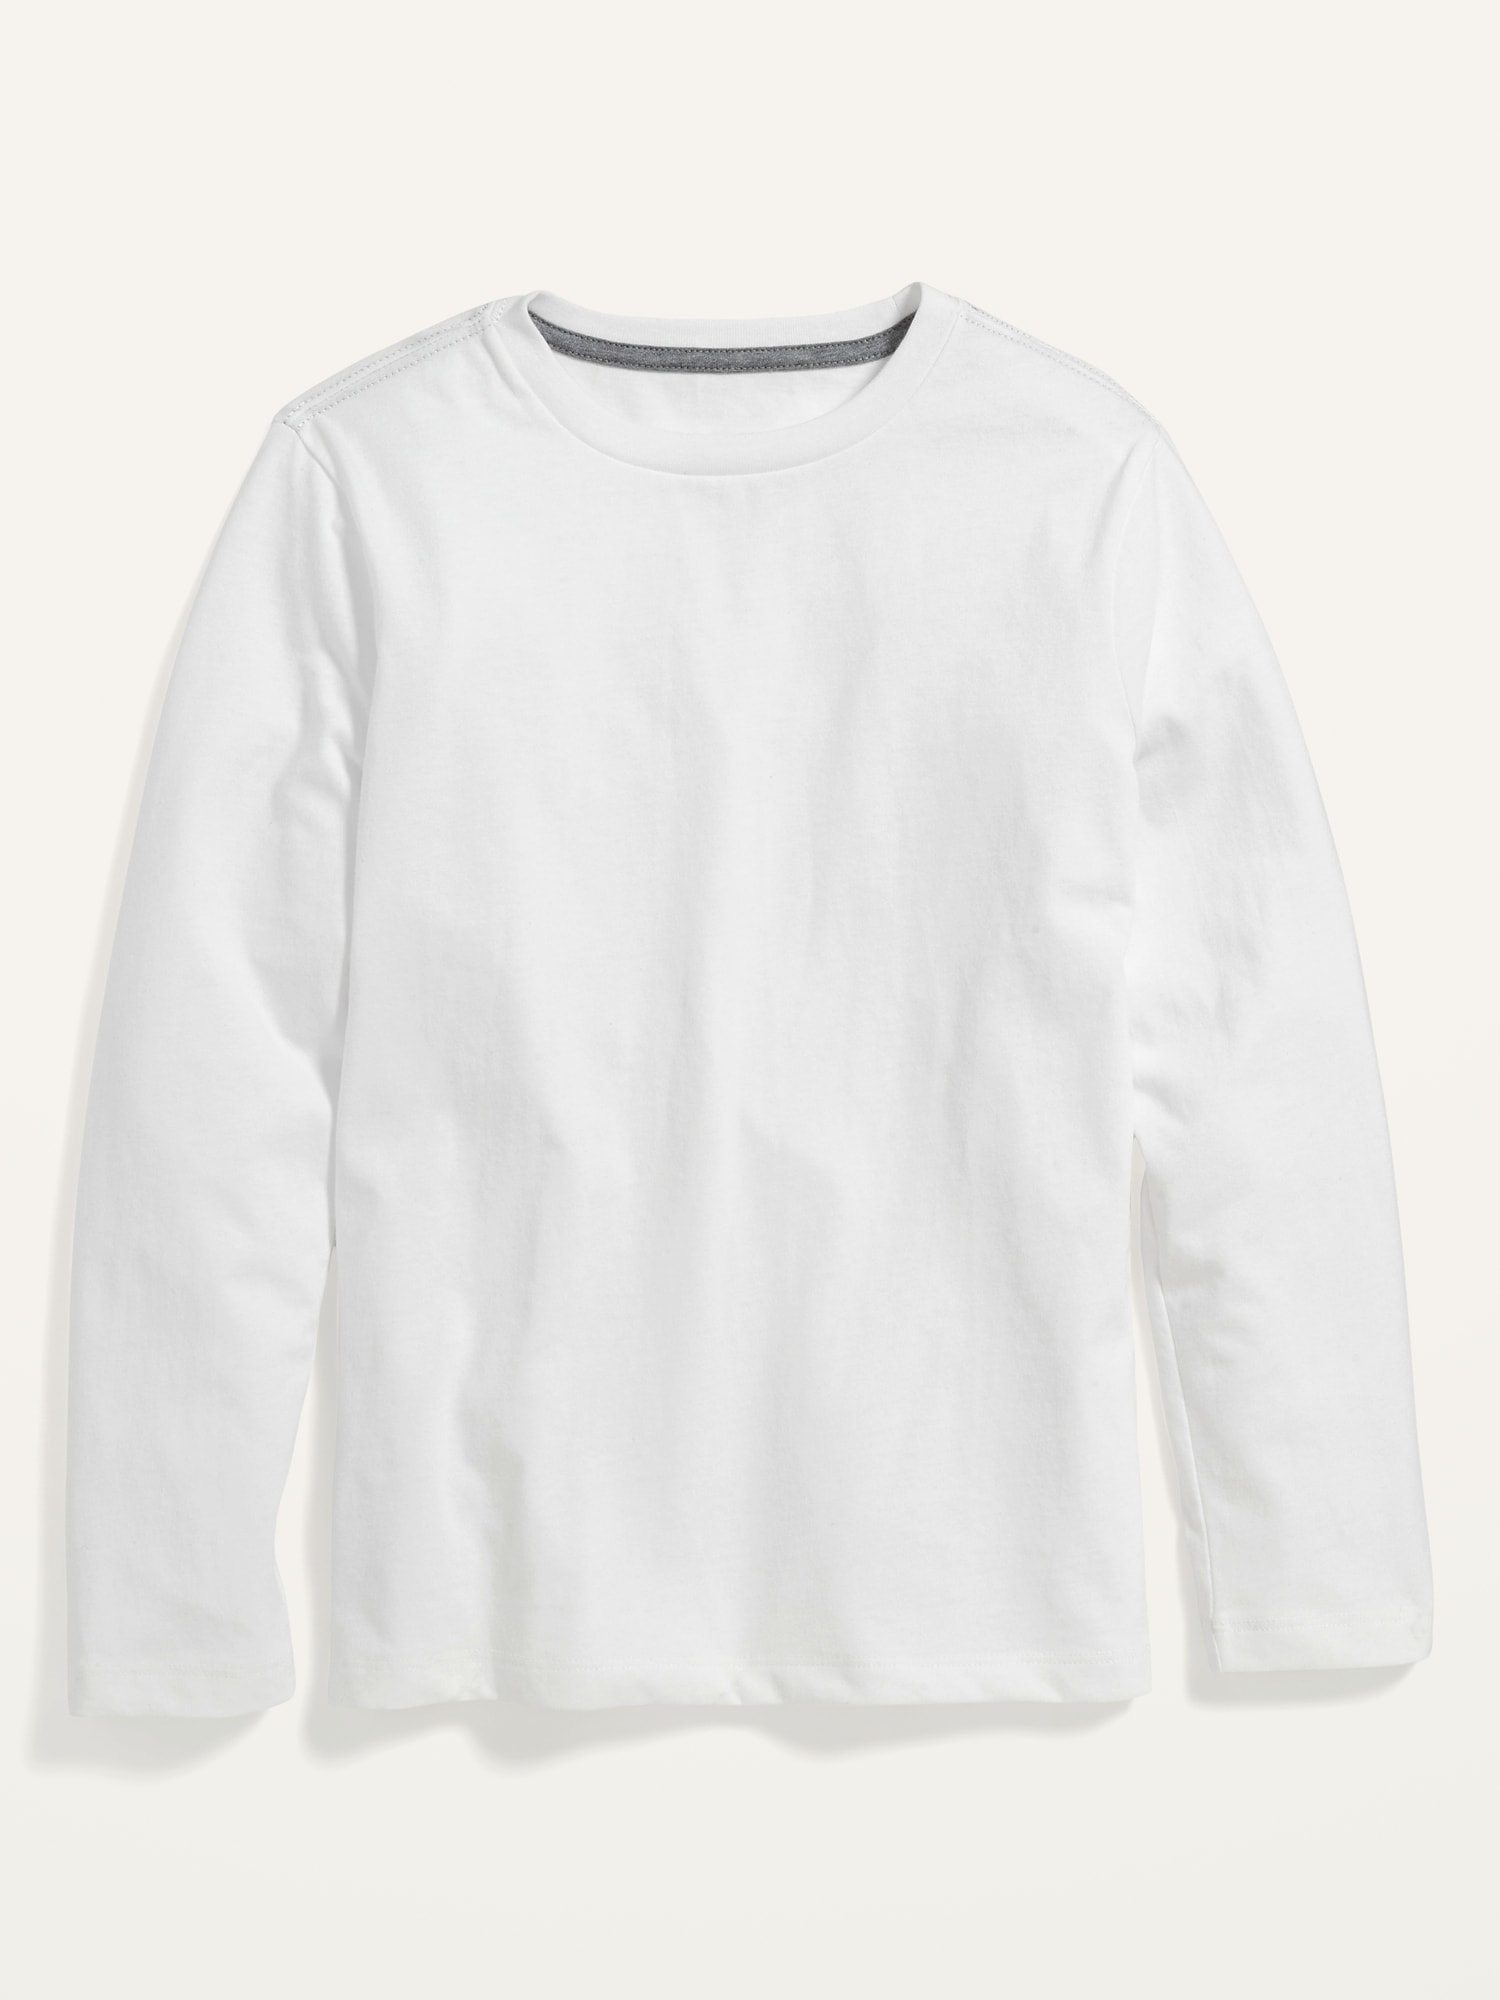 Gender-Neutral Softest Long-Sleeve T-Shirt For Kids | Old Navy